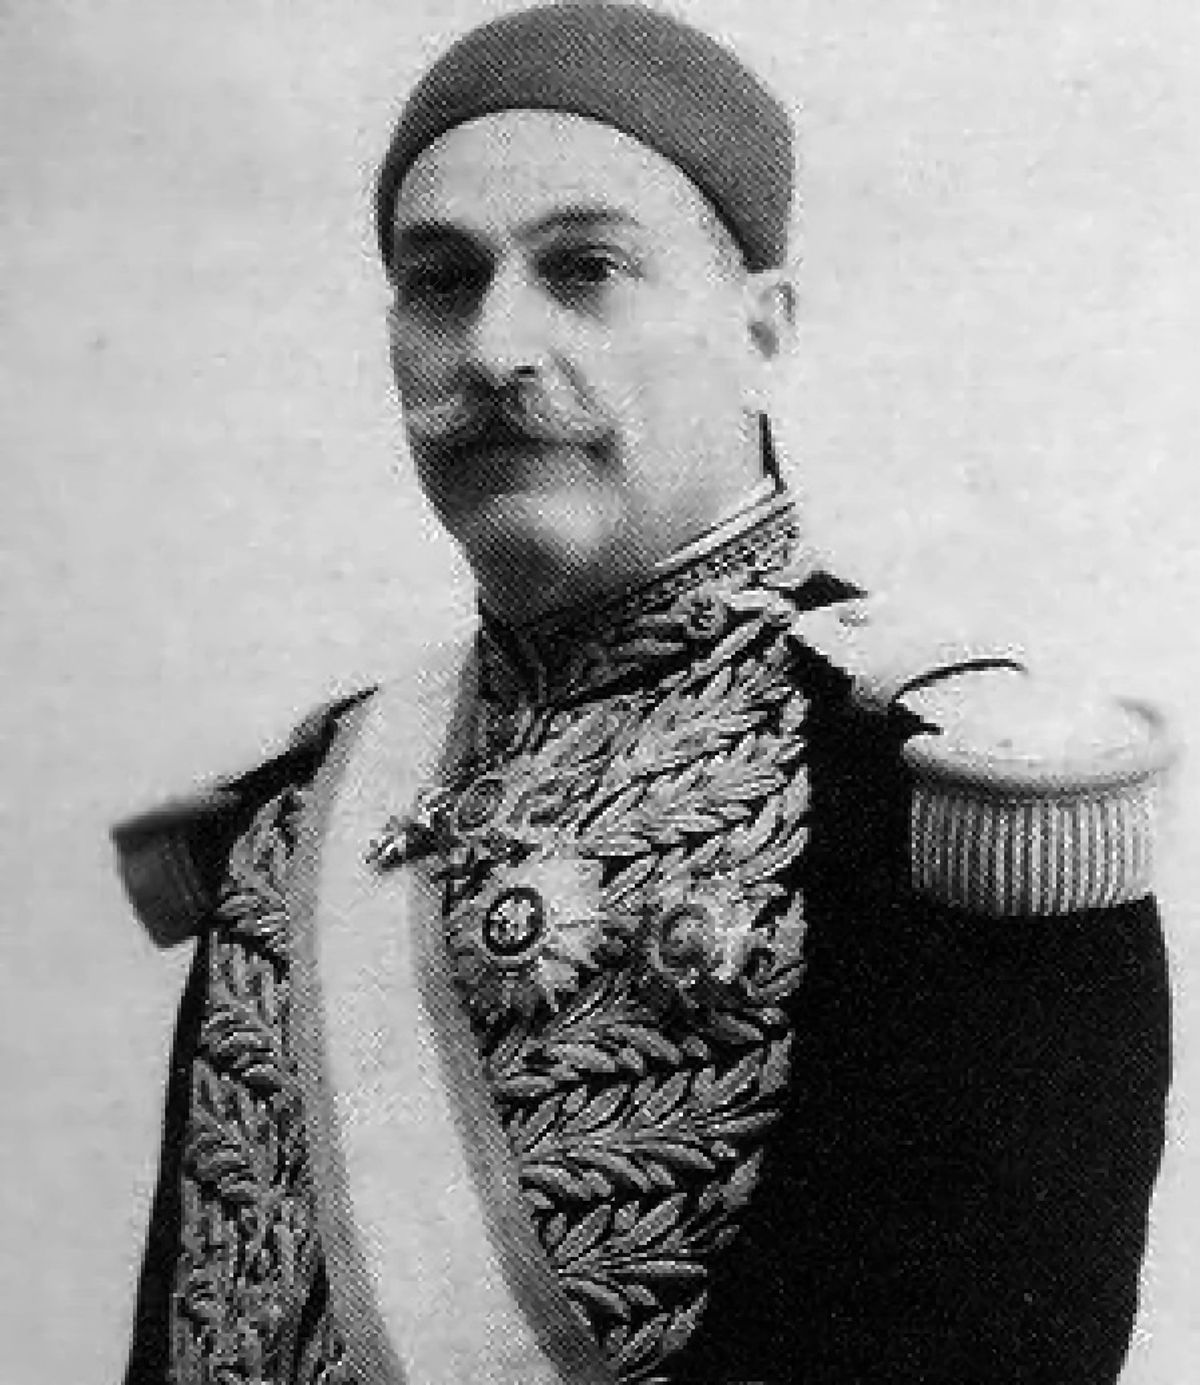 The Tunisian politician Habib Djellouli via wikicommons